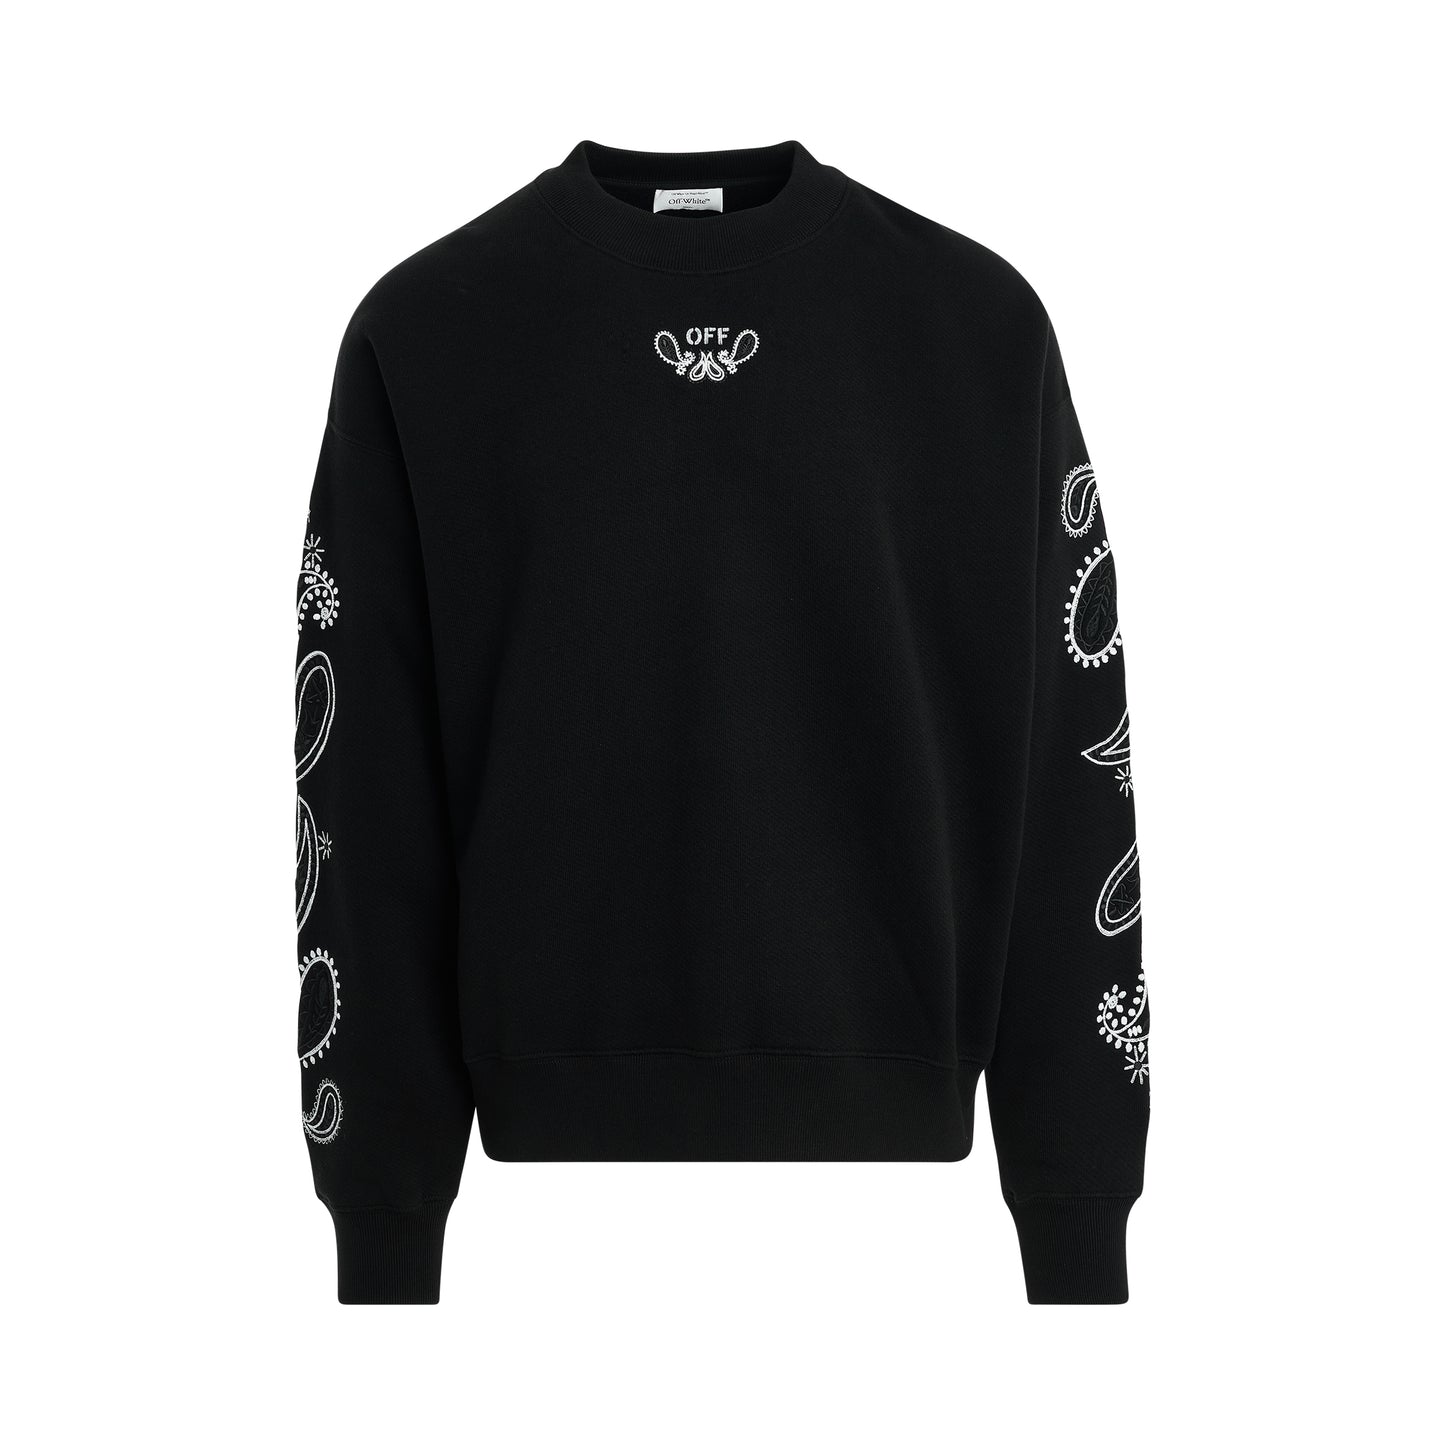 Bandana Arrow Skate Sweatshirt in Black/White